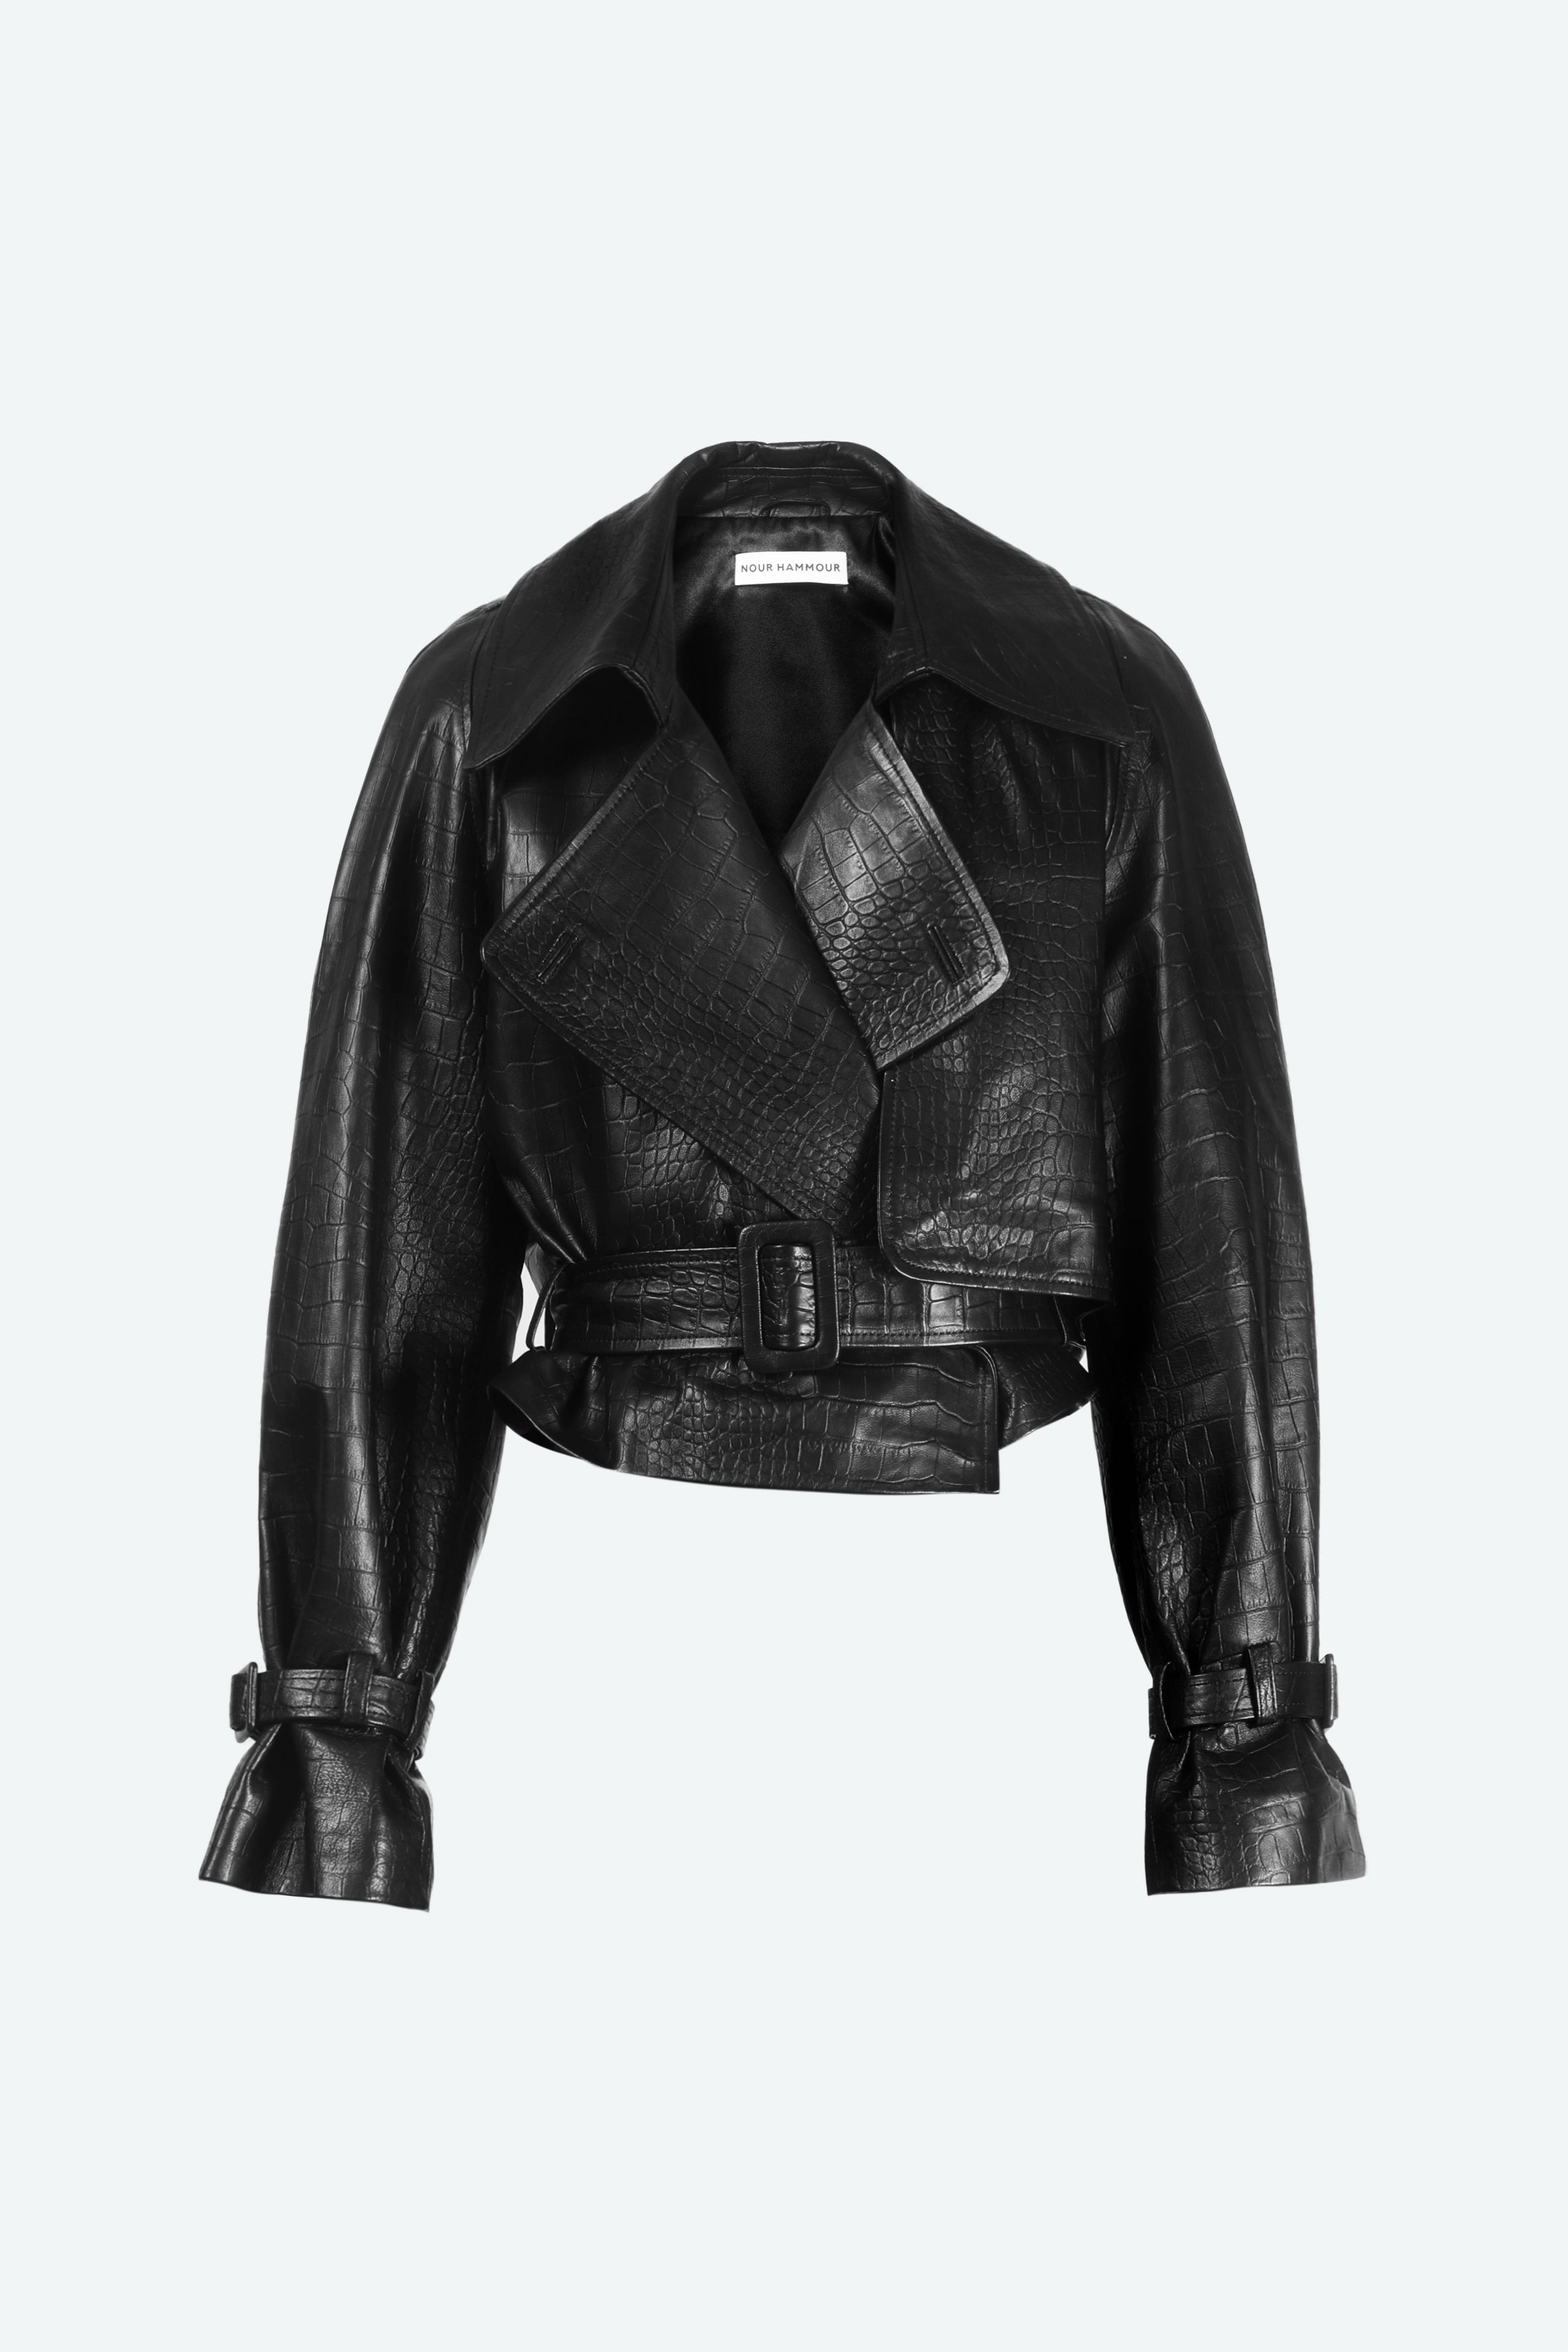 Hatti Croco Black Cropped Leather Jacket Packshot